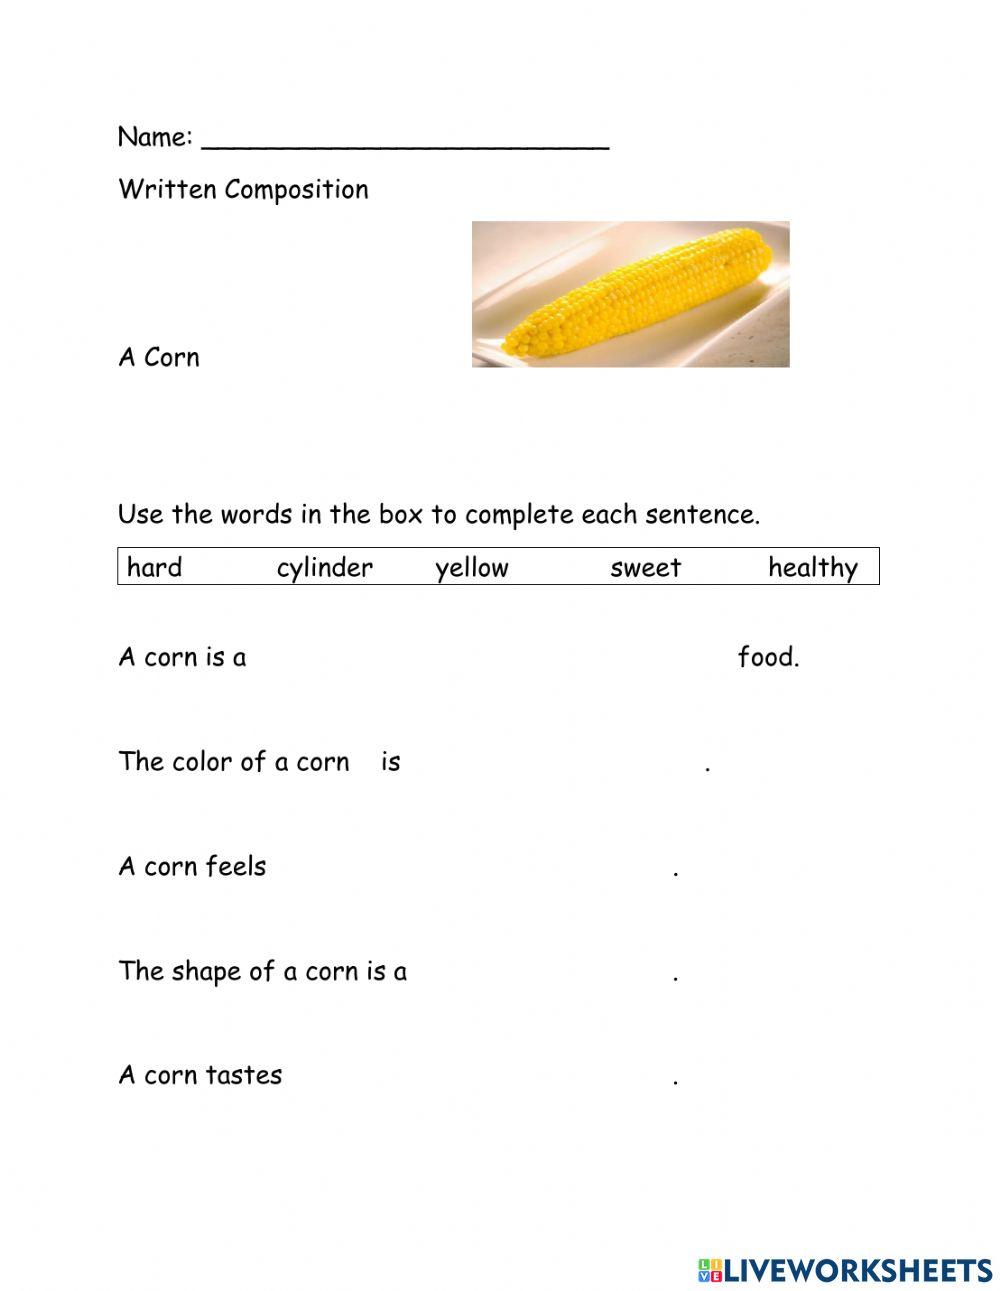 A corn